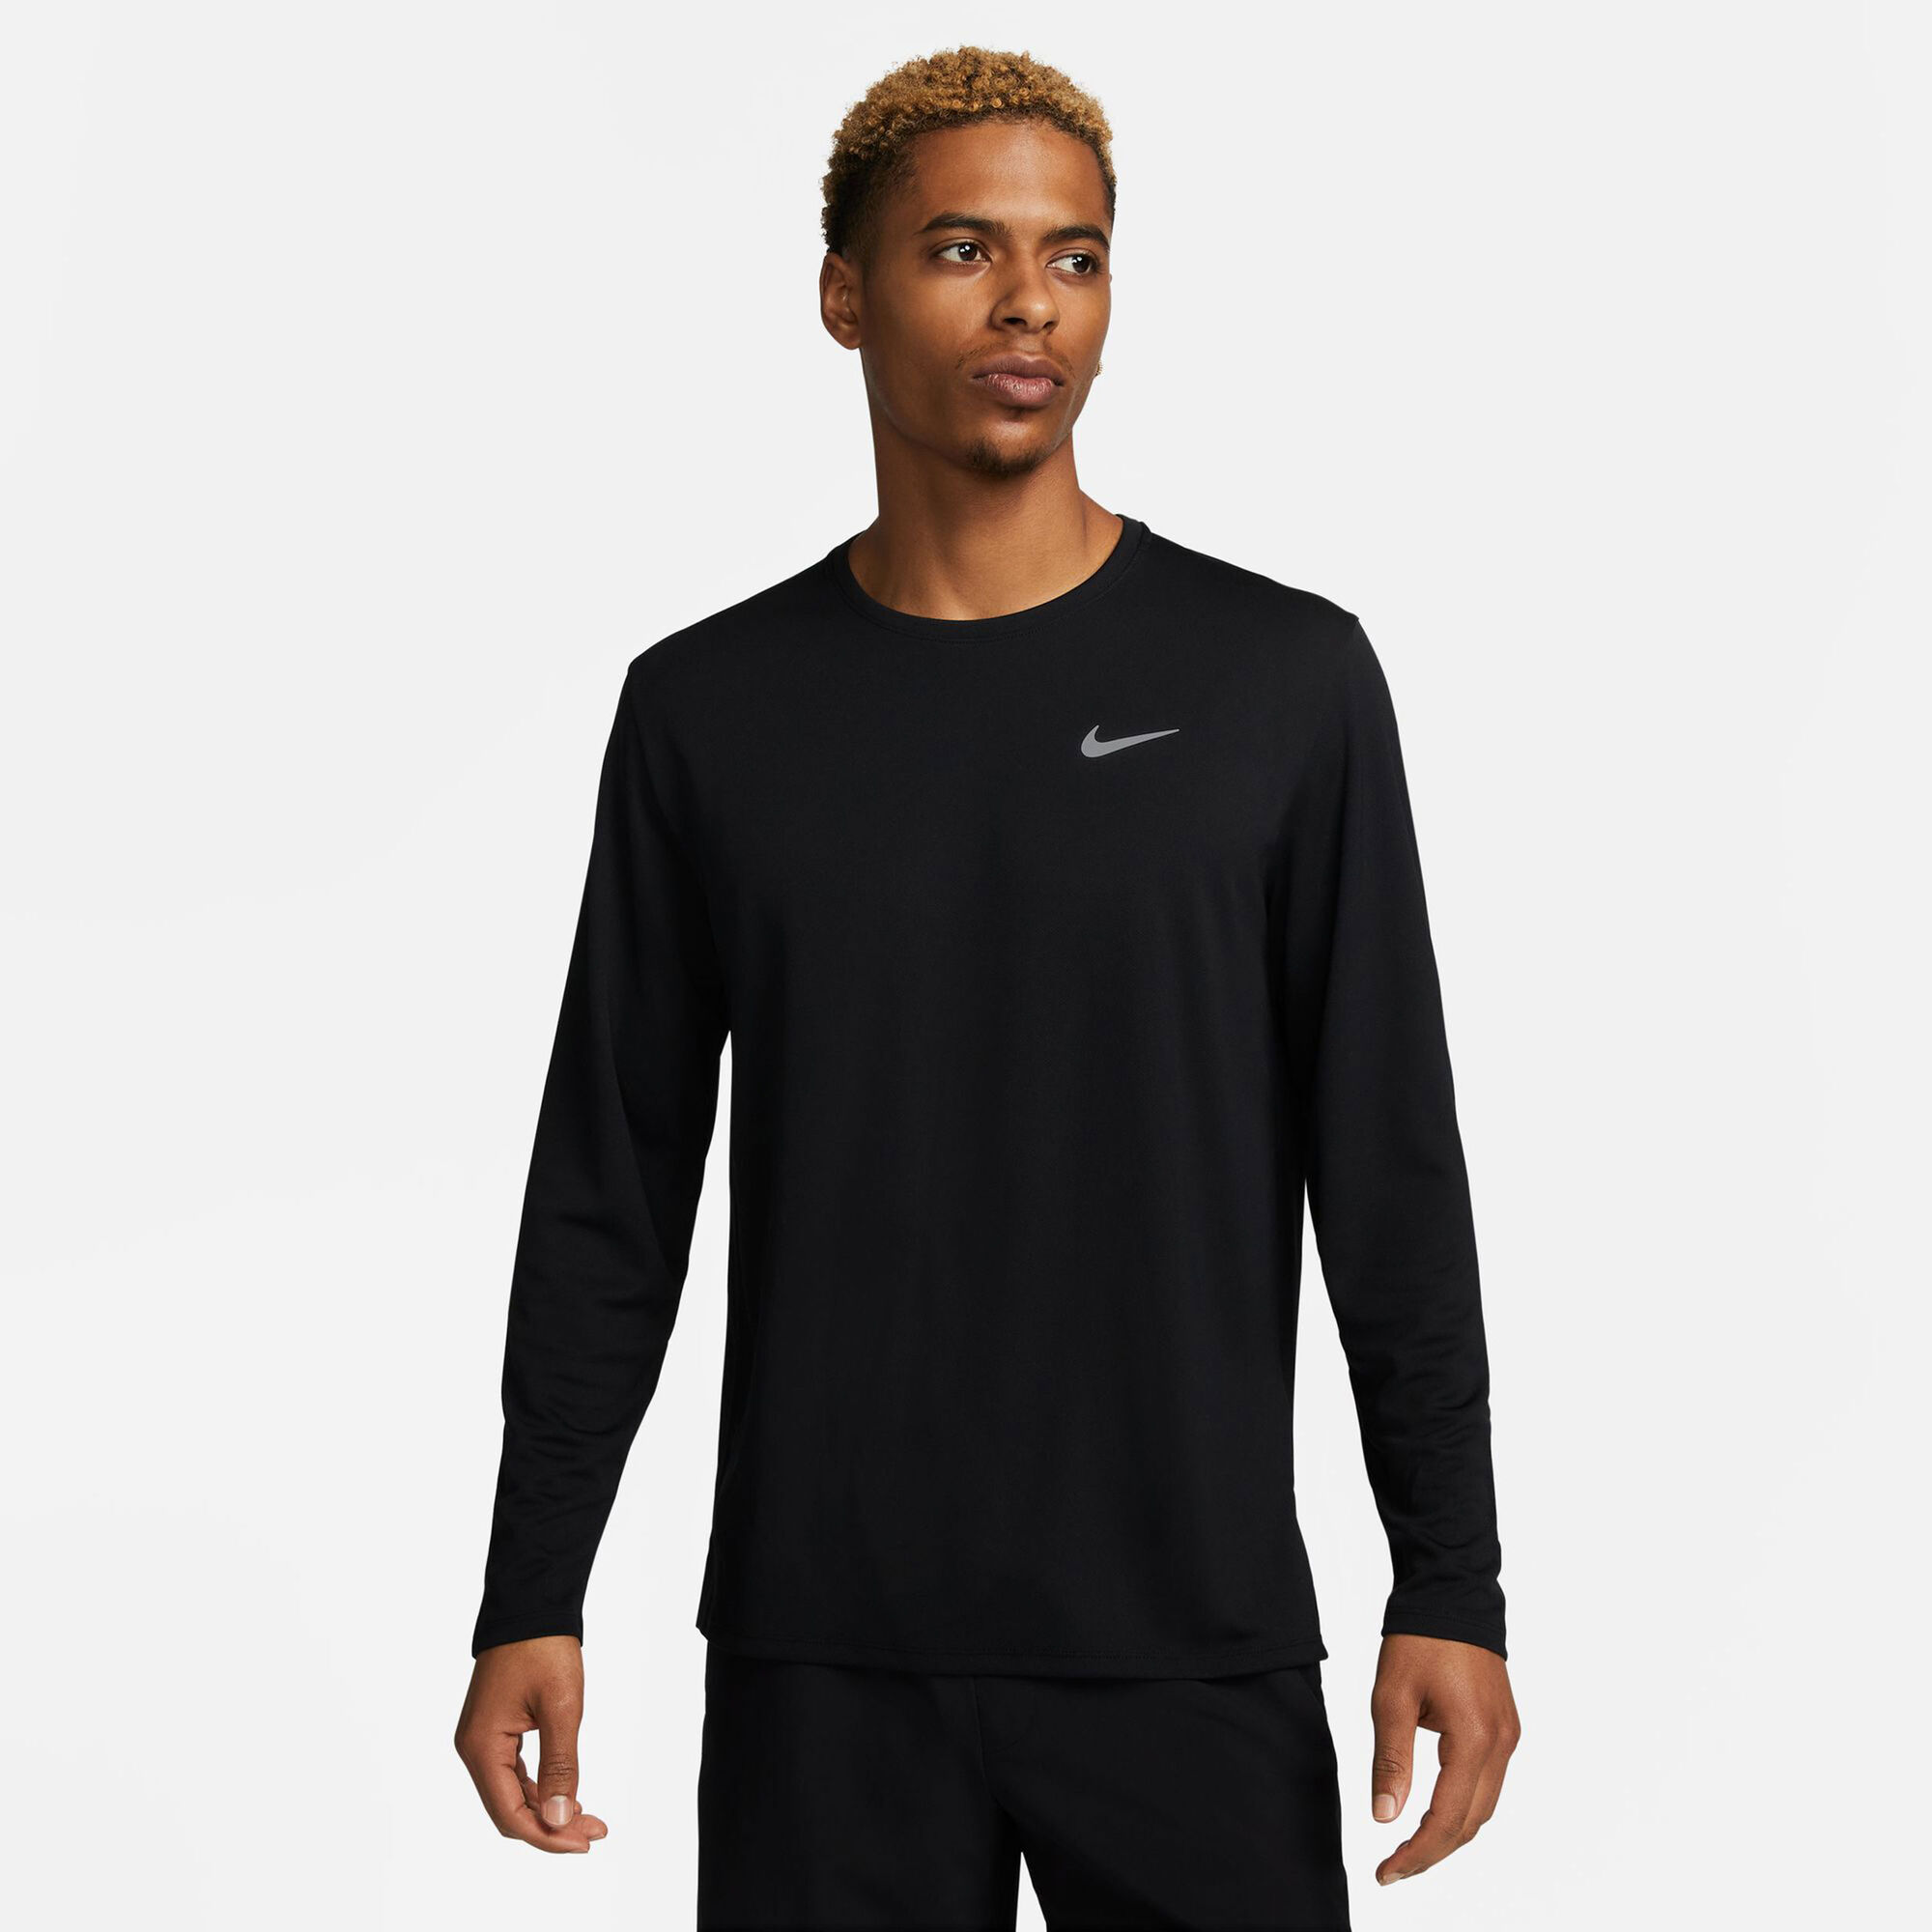 Buy Nike Dri-Fit UV Miler Running Tops Men Black online